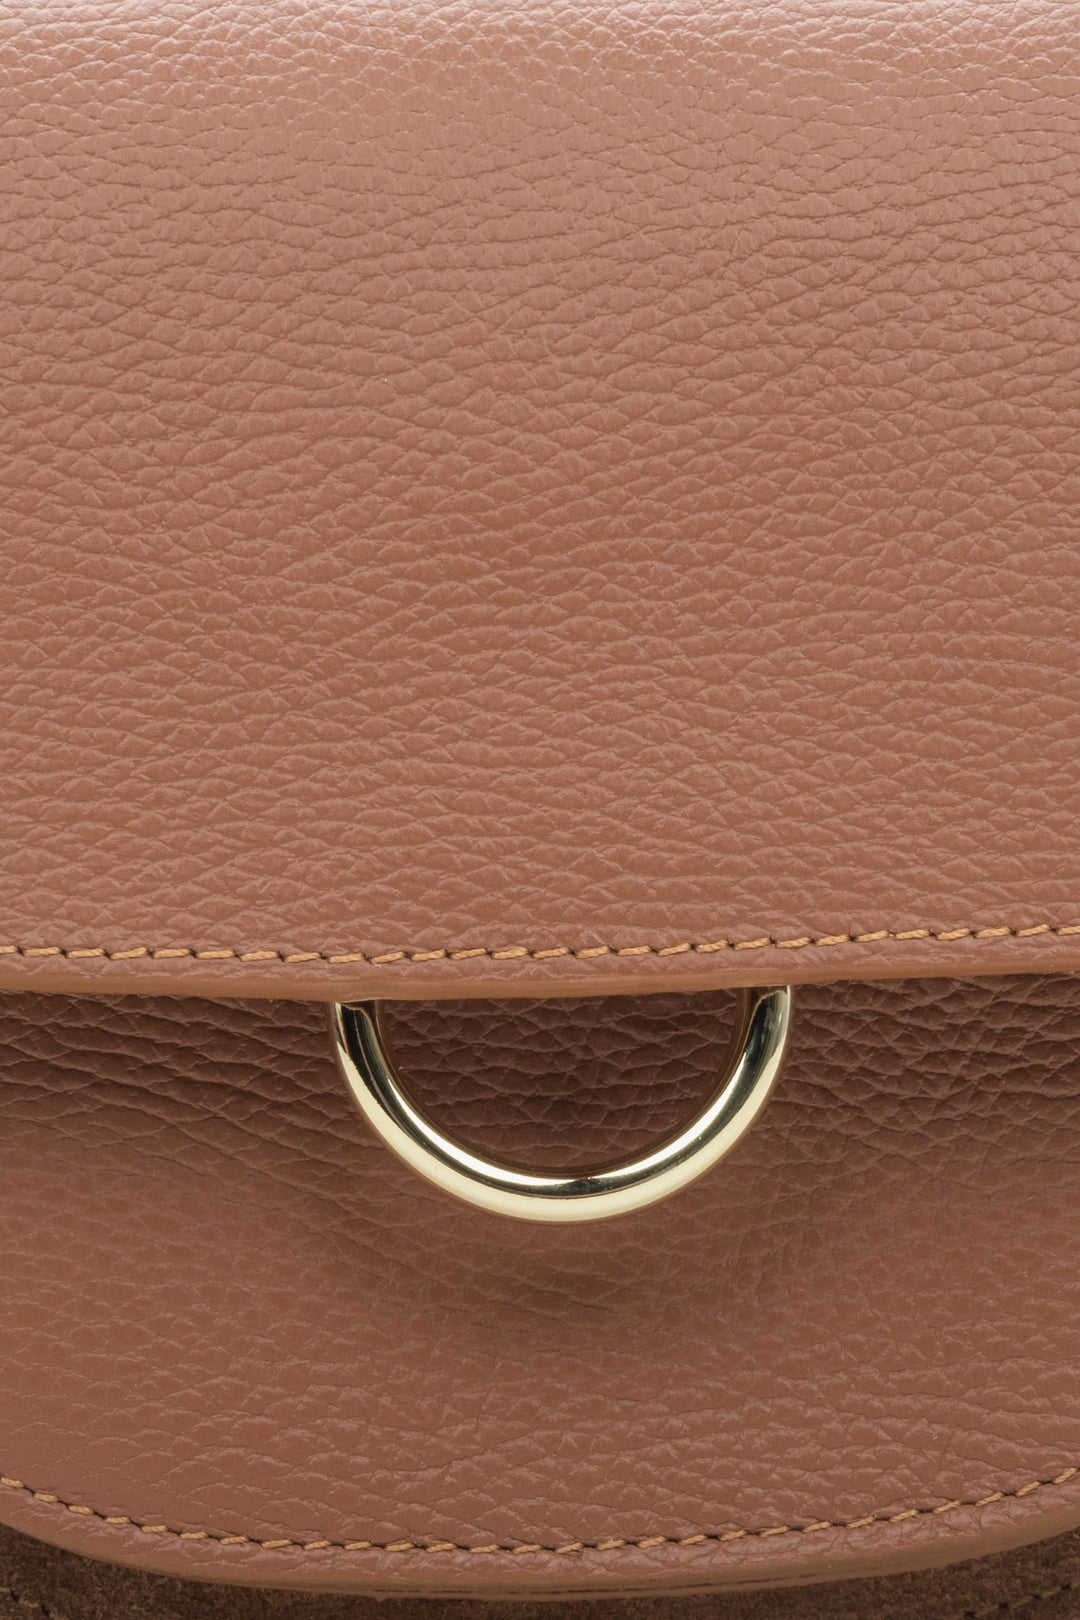 Small Italian leather brown crossbody women's bag.